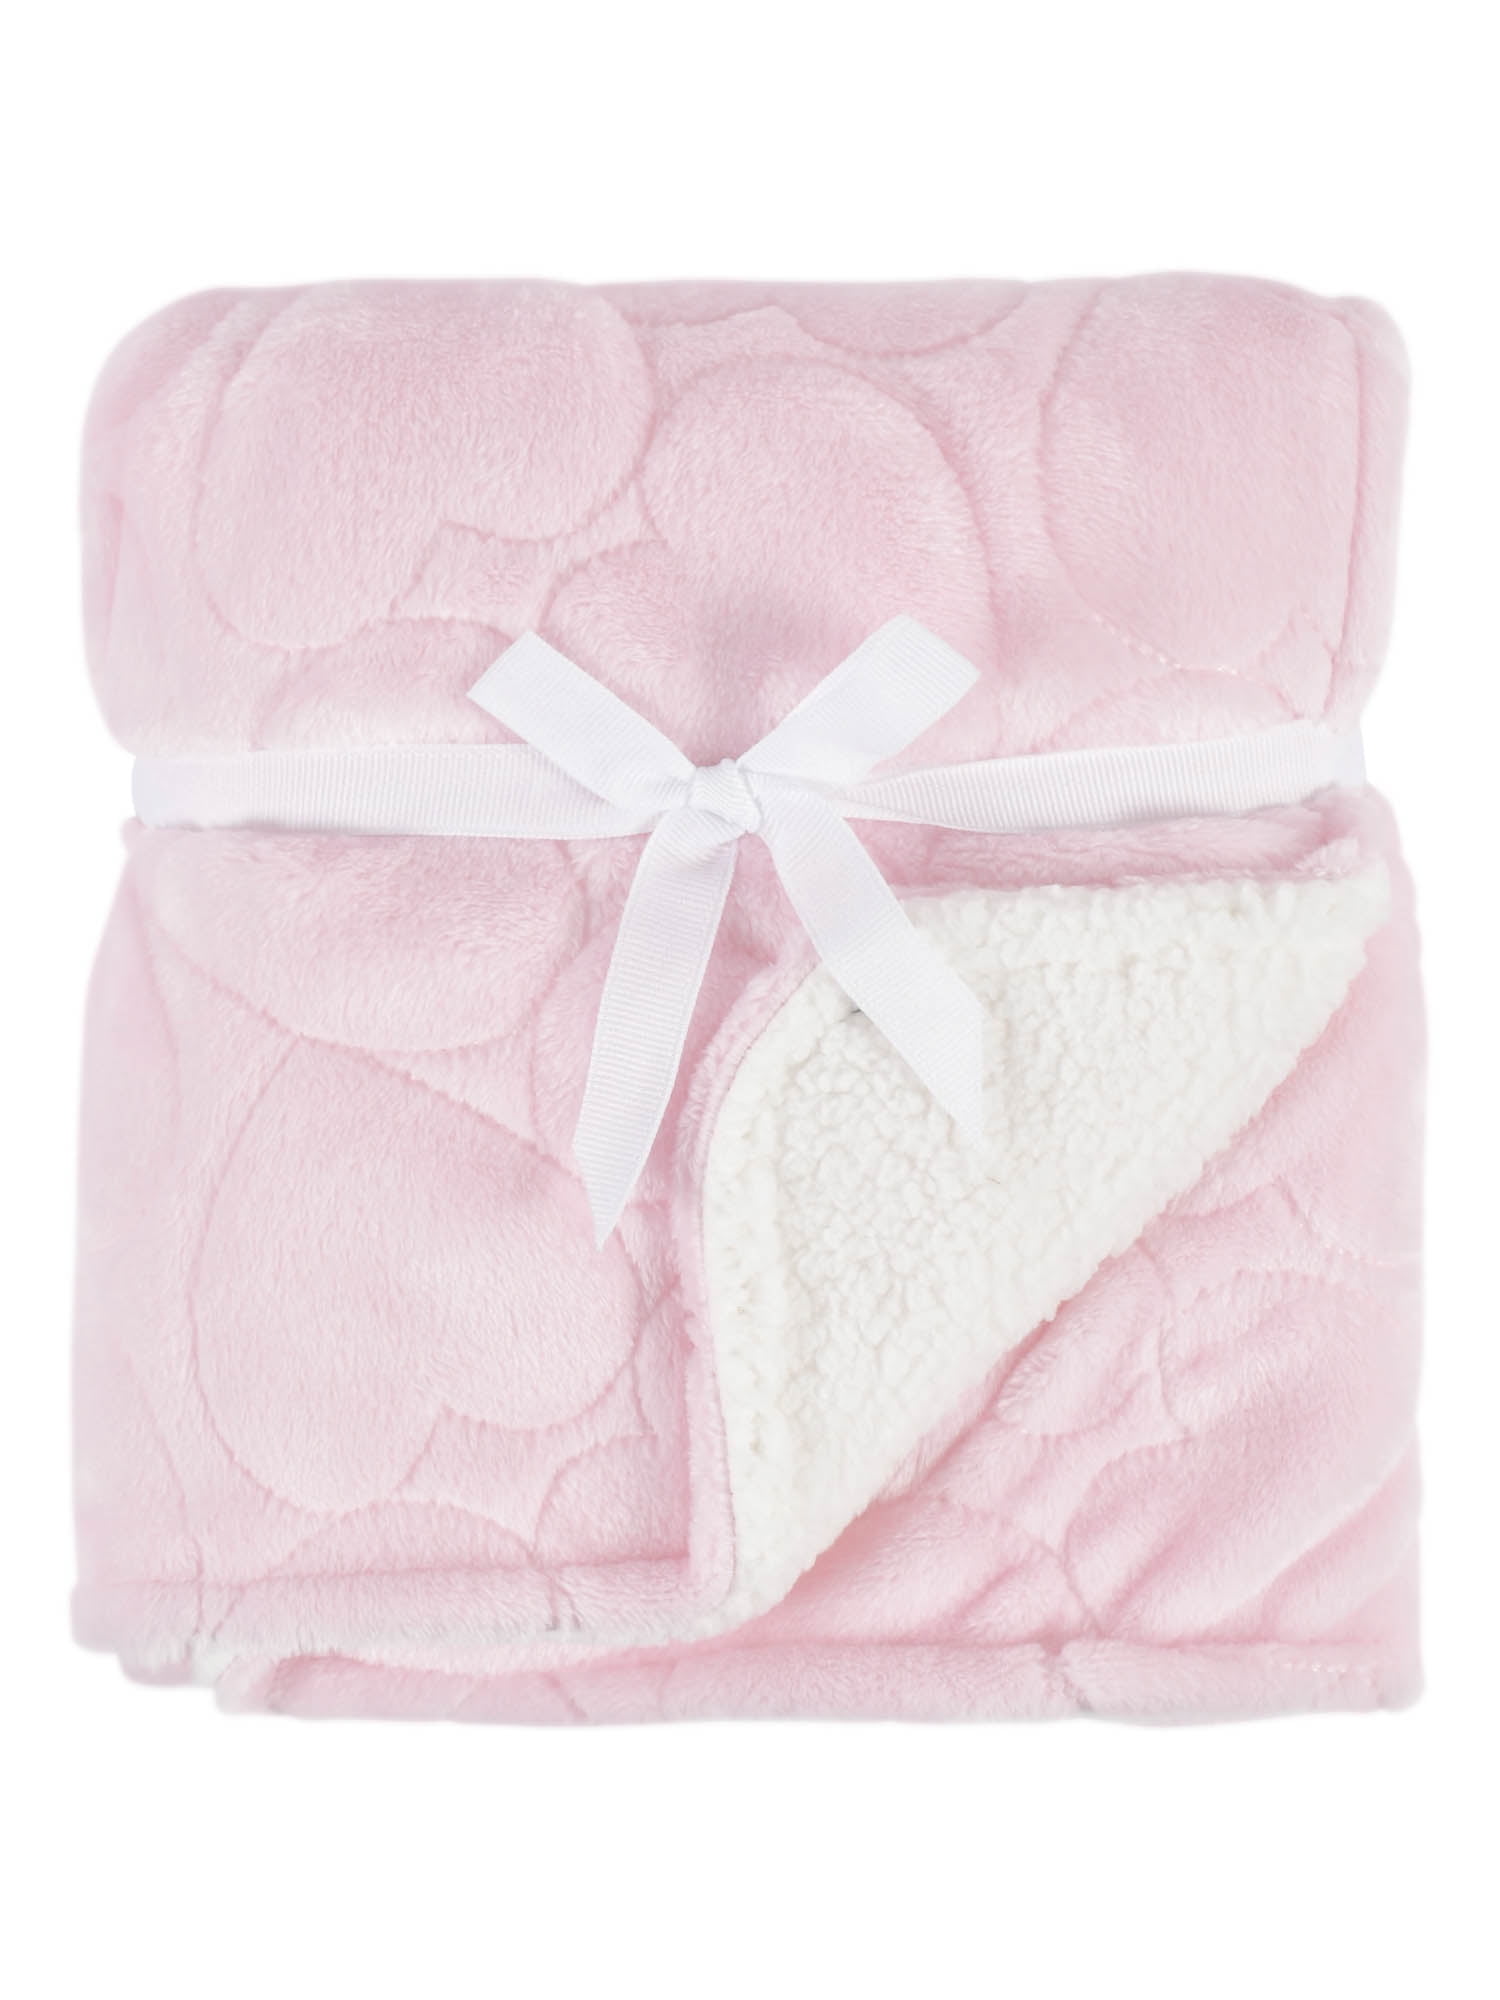 Pink Roses Hudson Baby Super Plush Blanket 30 x 40 